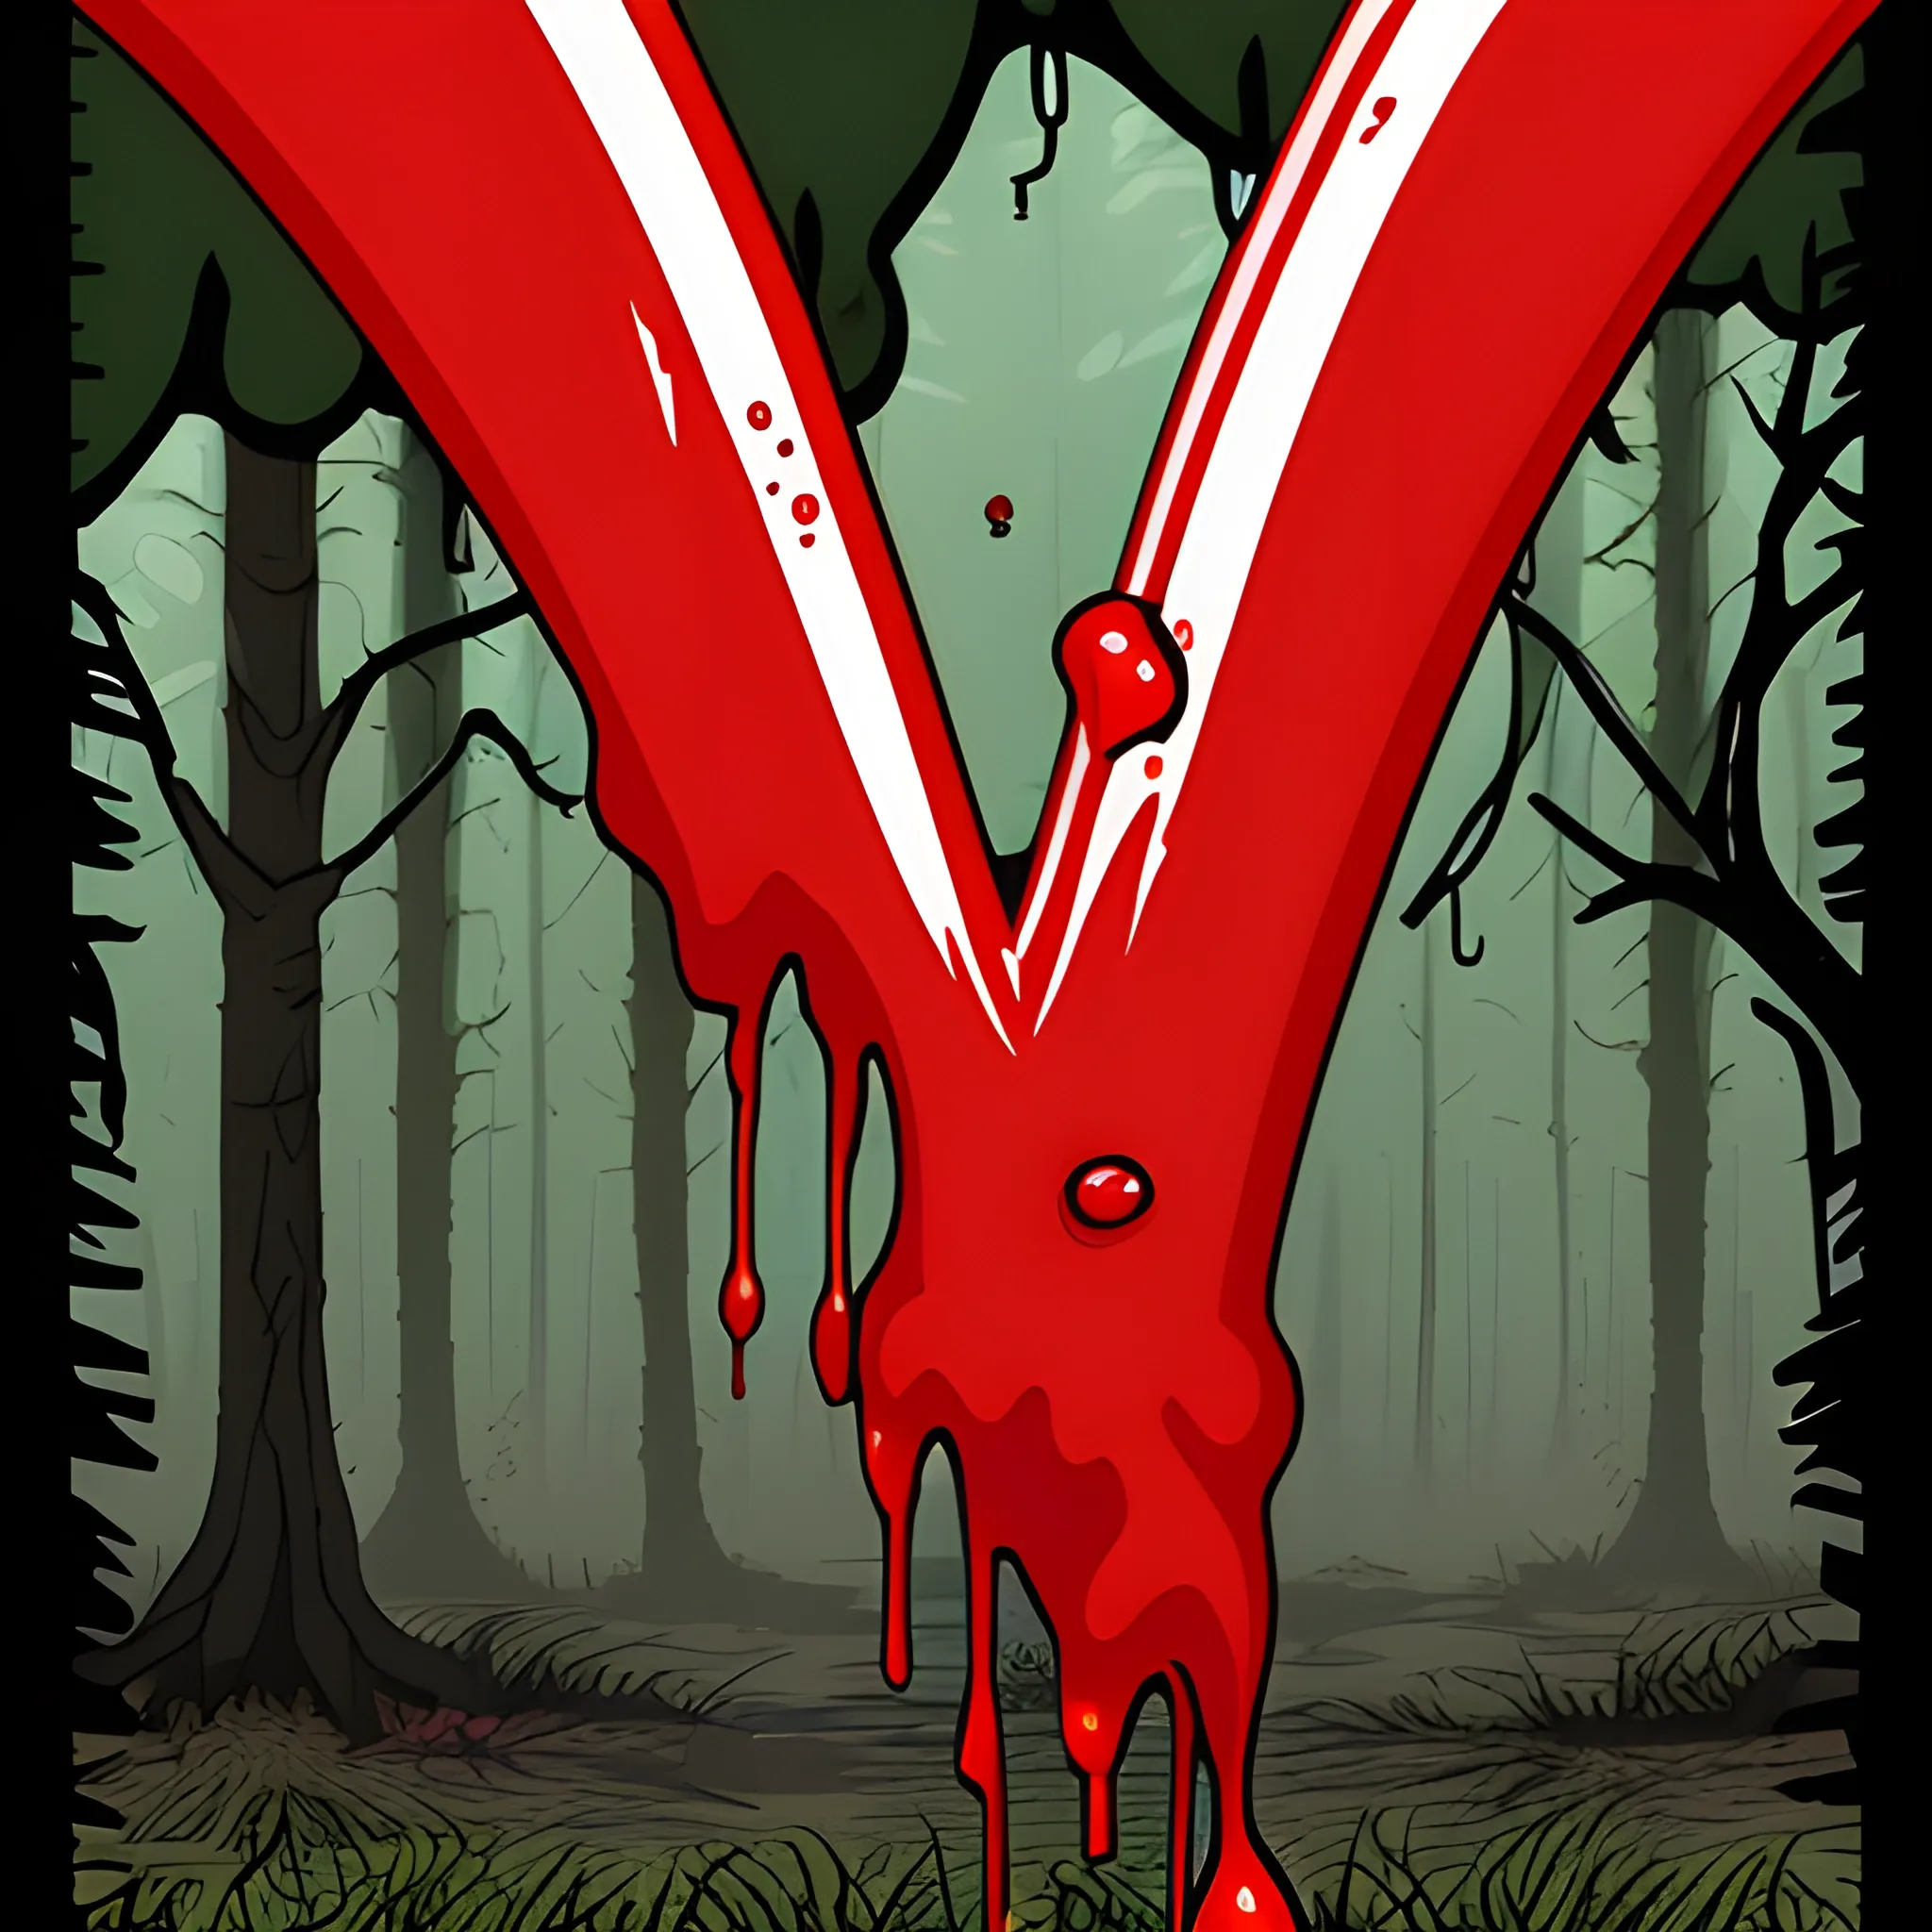 Bloody zombie blood dripping, forest background, hyper deformed, Cartoon